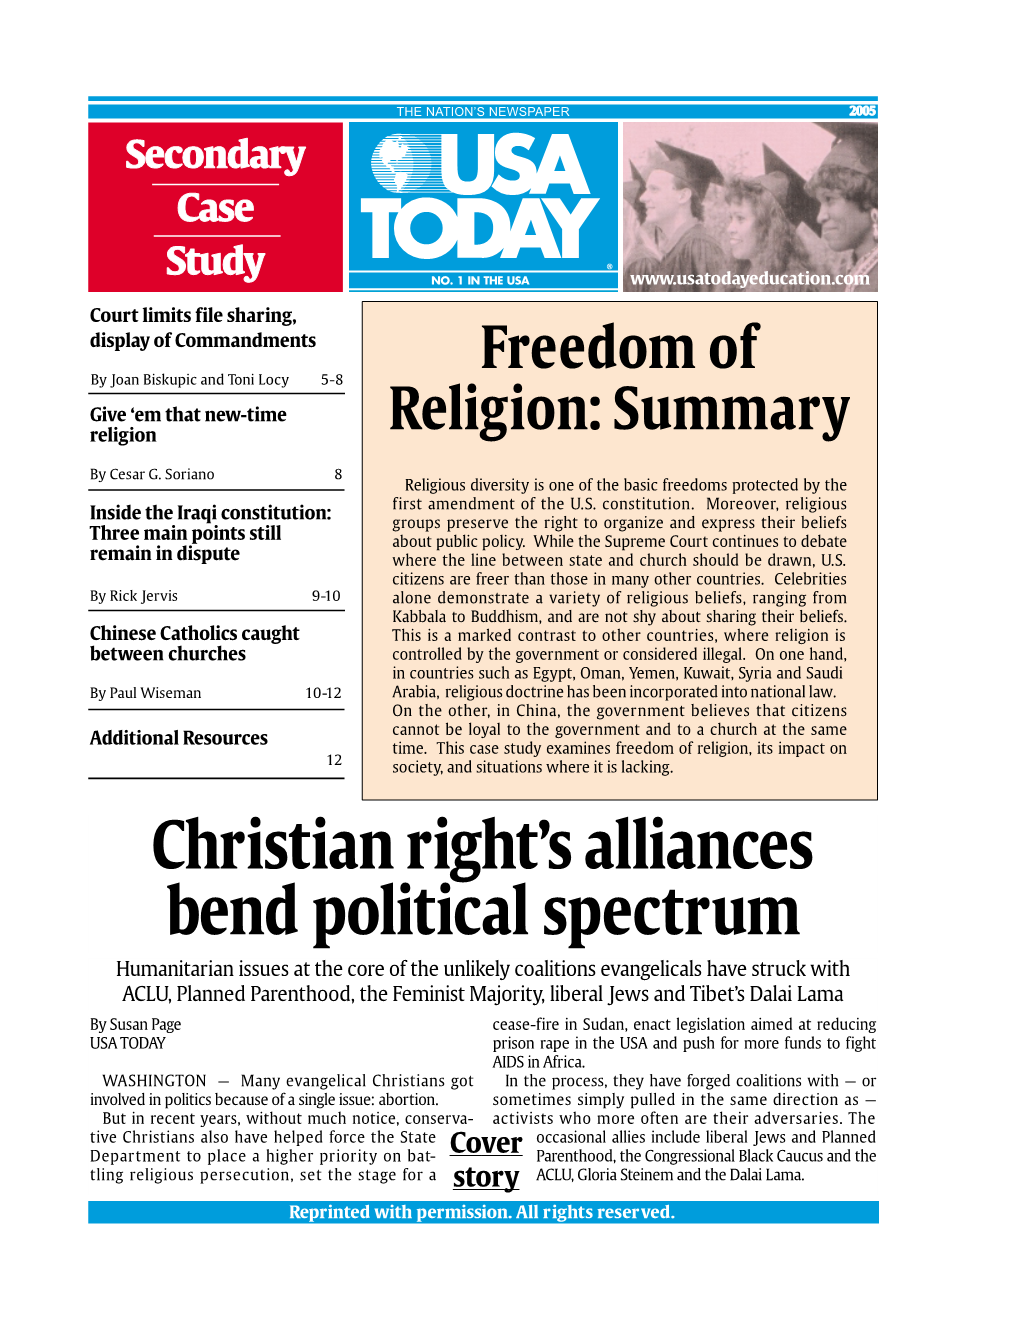 Christian Right's Alliances Bend Political Spectrum